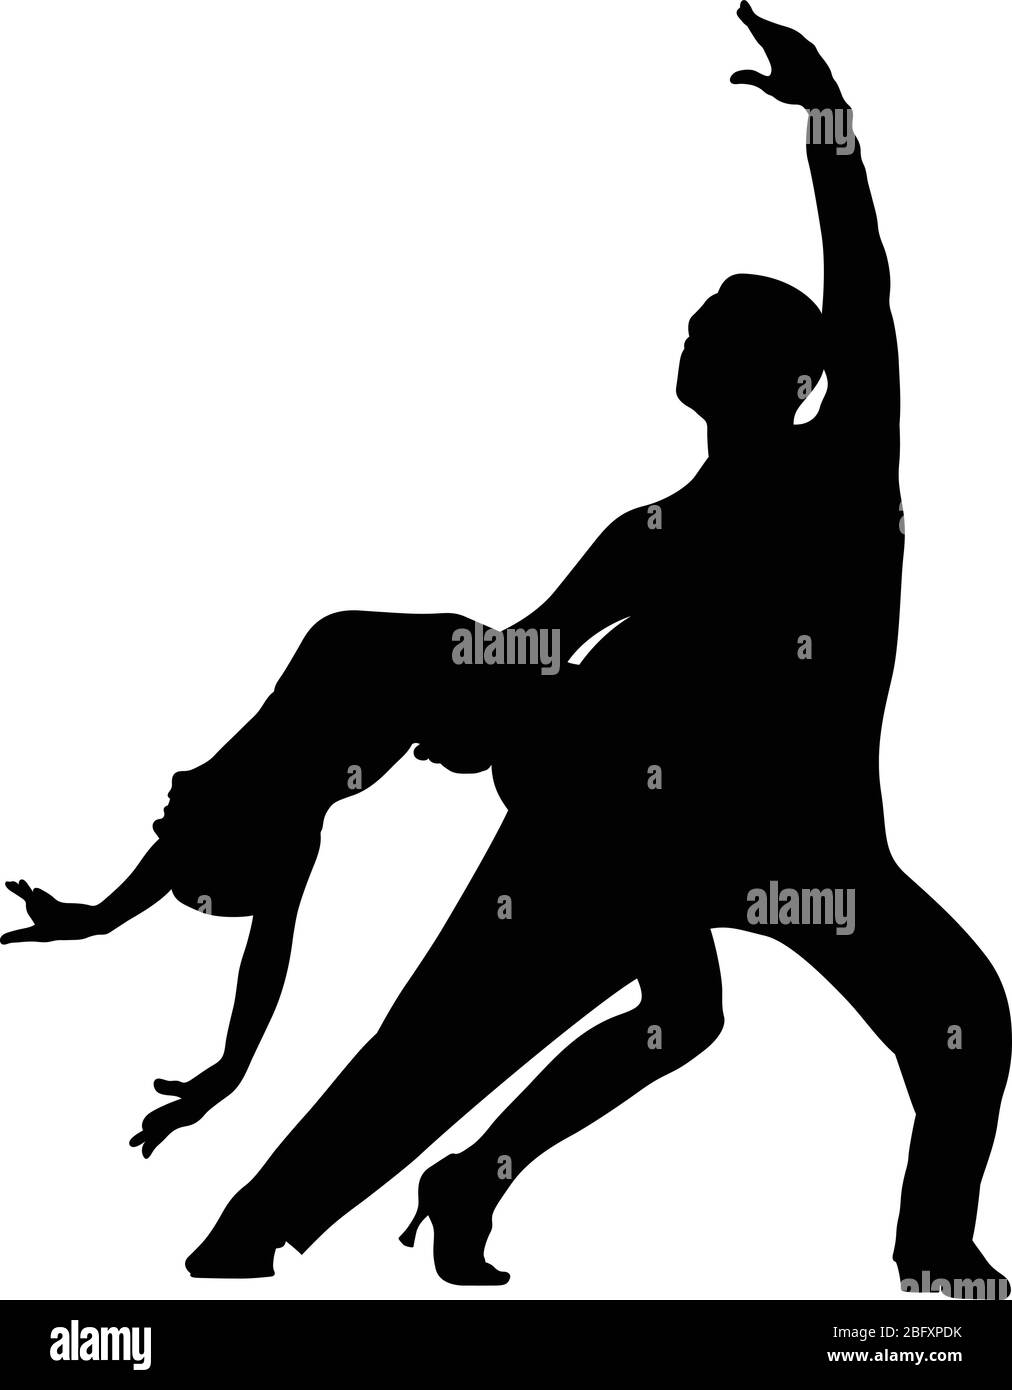 ballroom dancing black silhouette couple of dancers Stock Vector Image ...